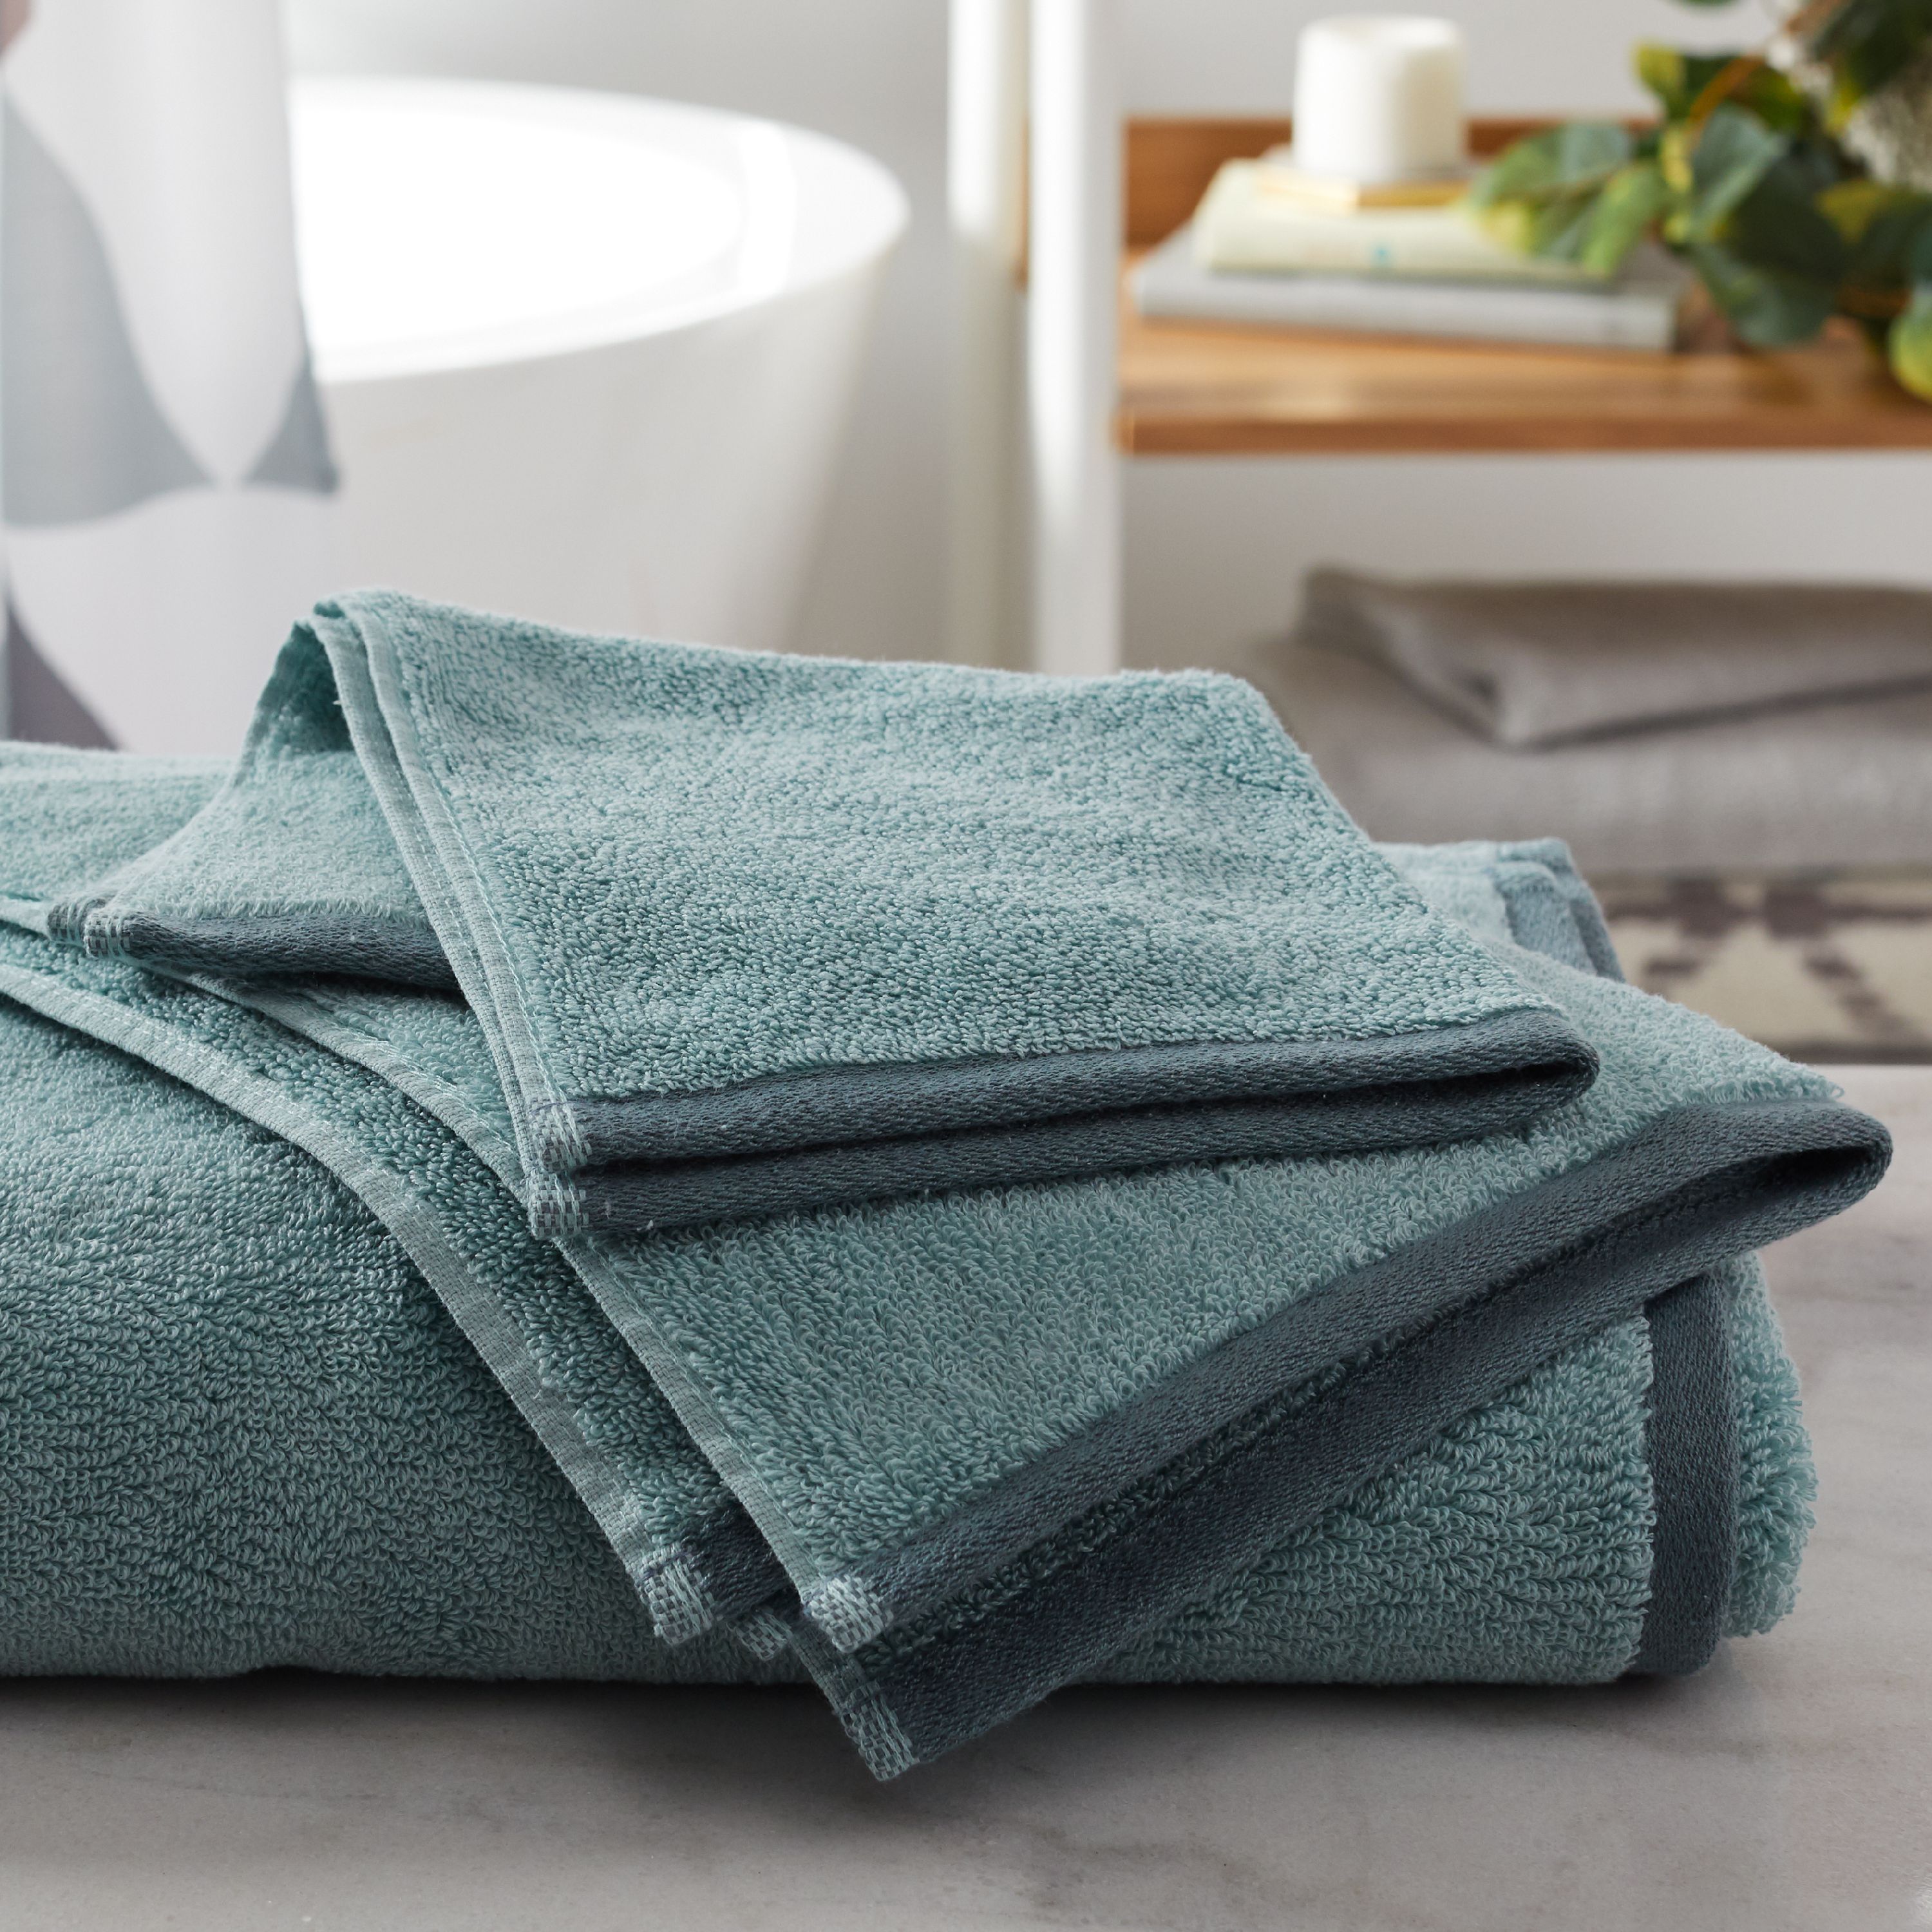 Soft Teal/Sea Gray 3 Piece Towel Set, MoDRN Hemp Towel Collection - image 1 of 2